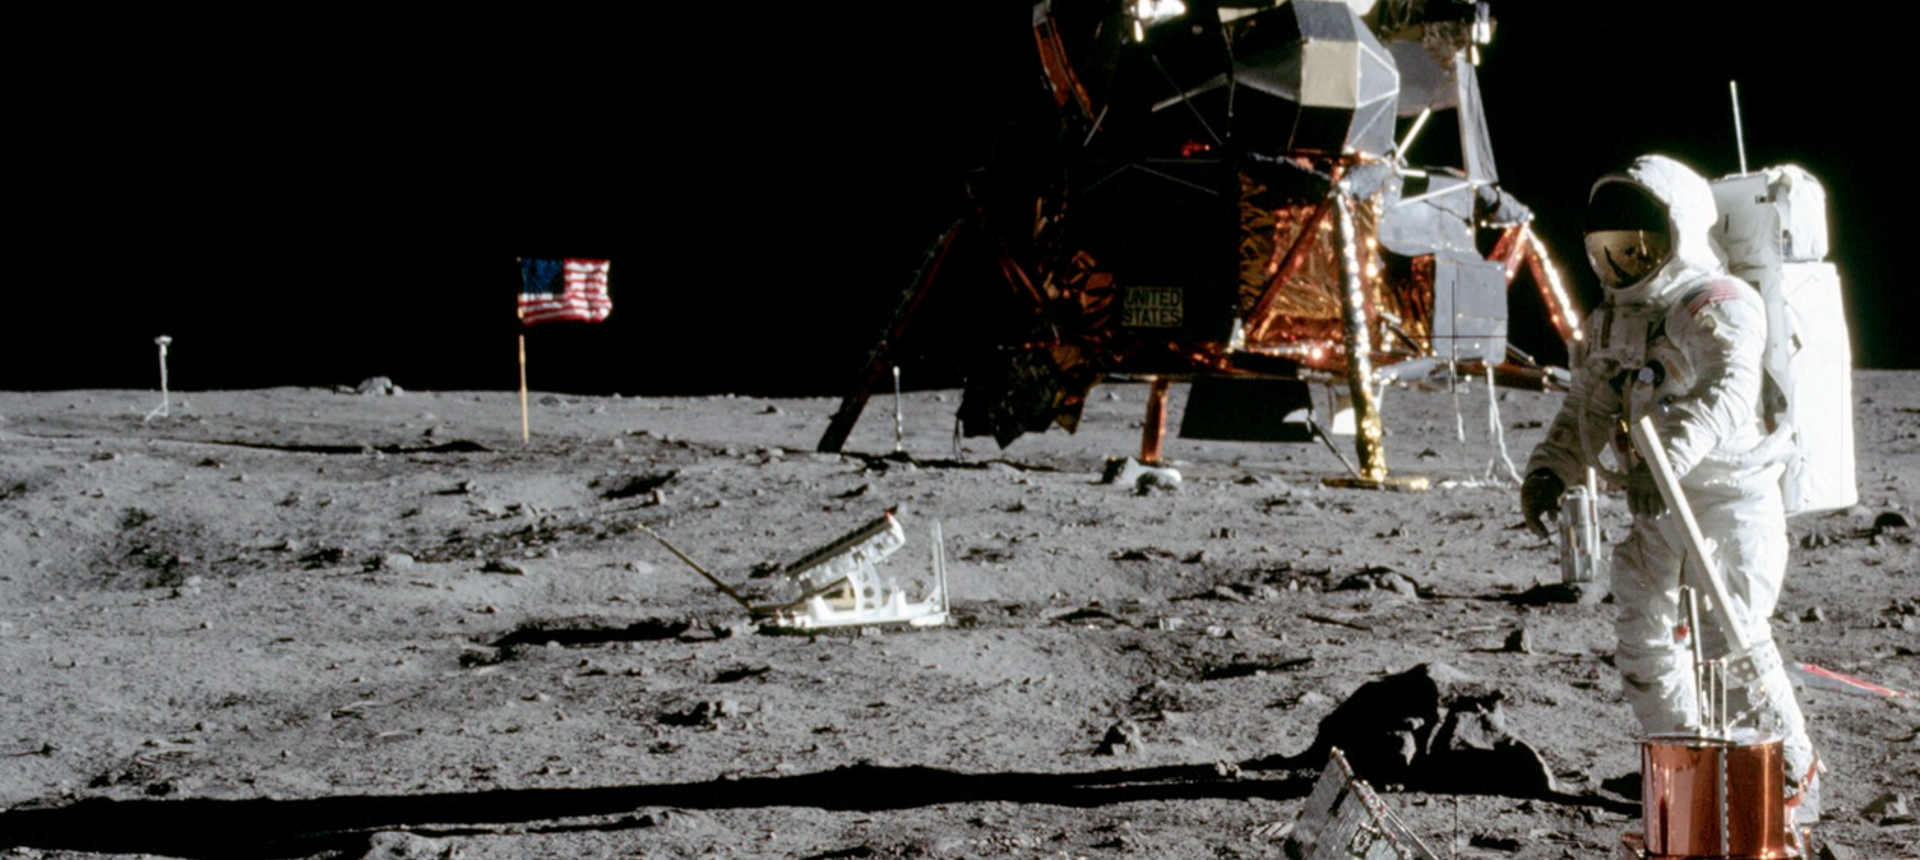 Dal sito: Apollo 11 in real time - https://apolloinrealtime.org/11/